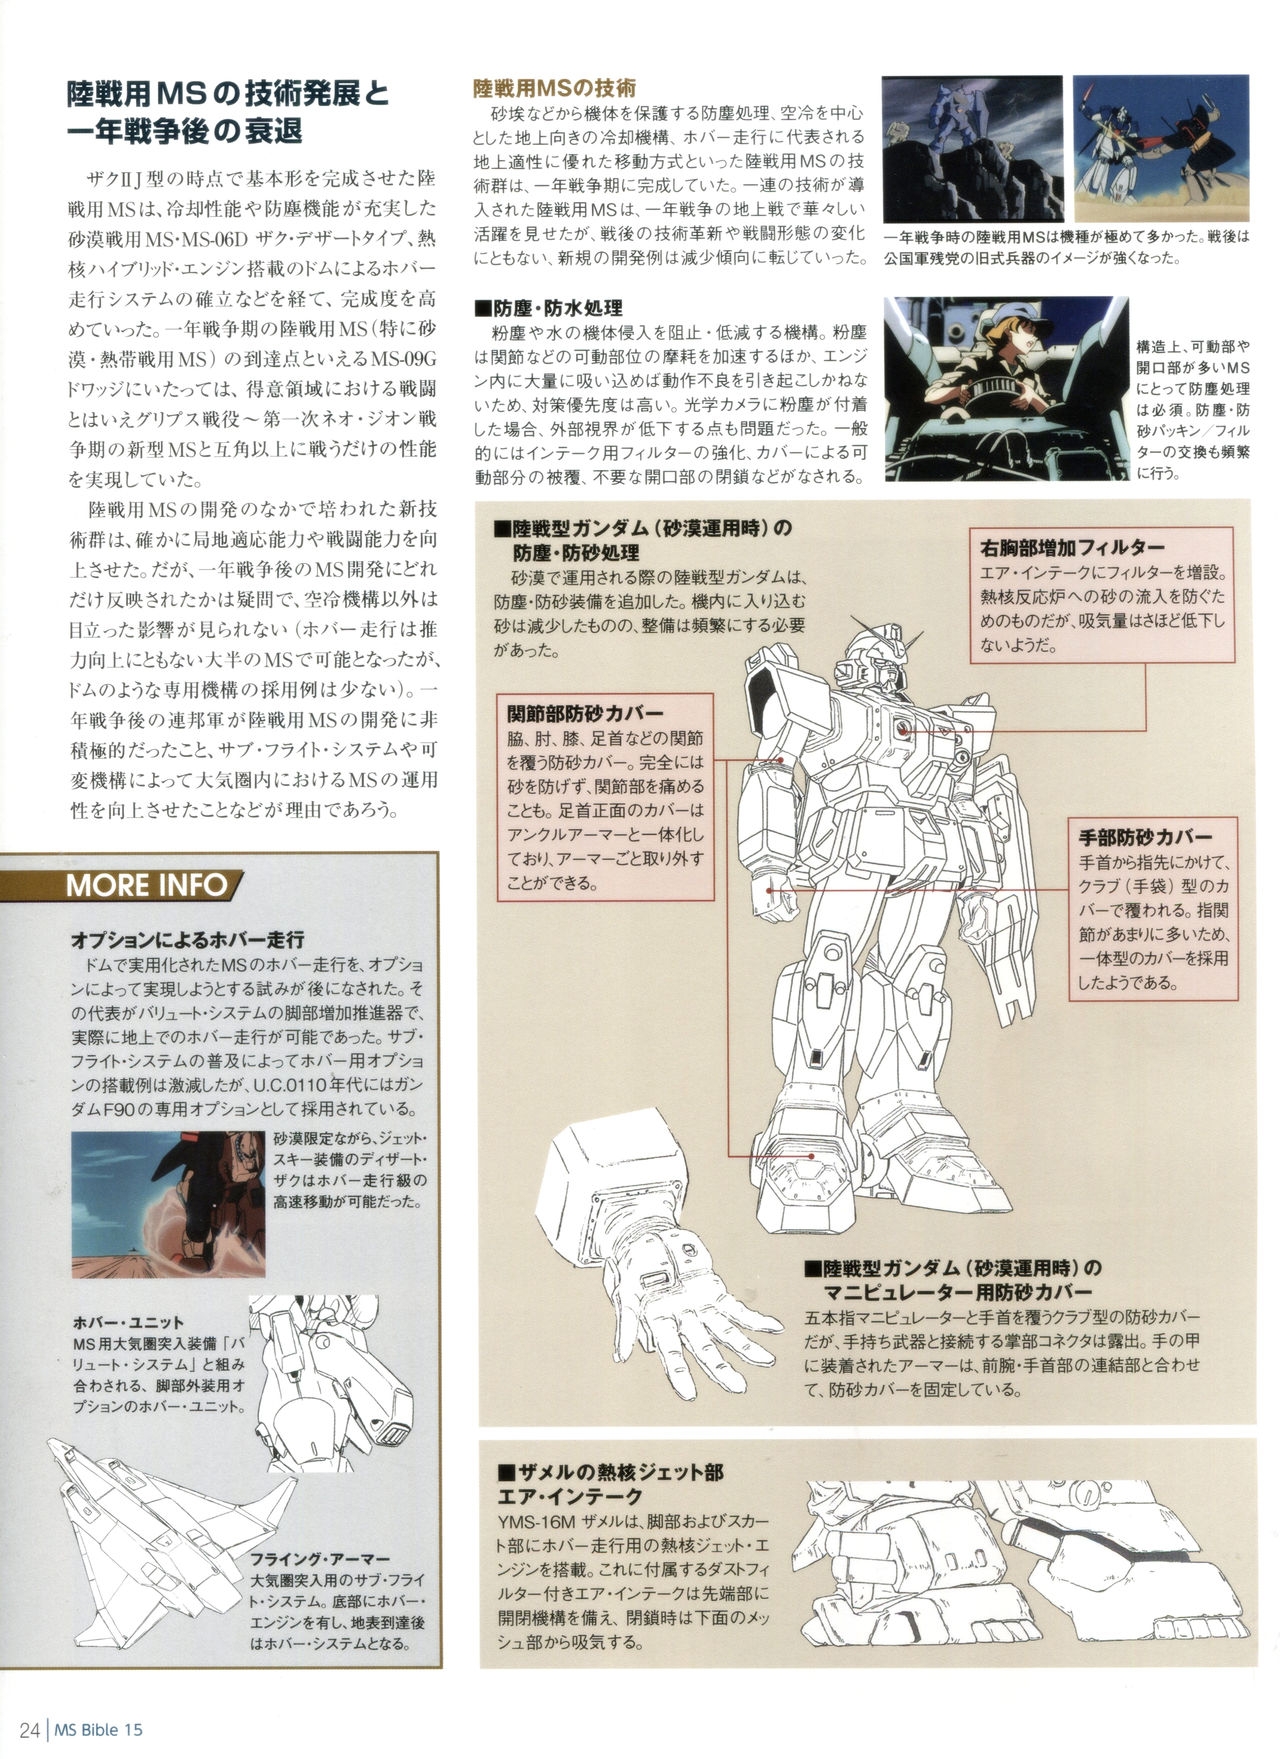 Gundam Mobile Suit Bible 15 25